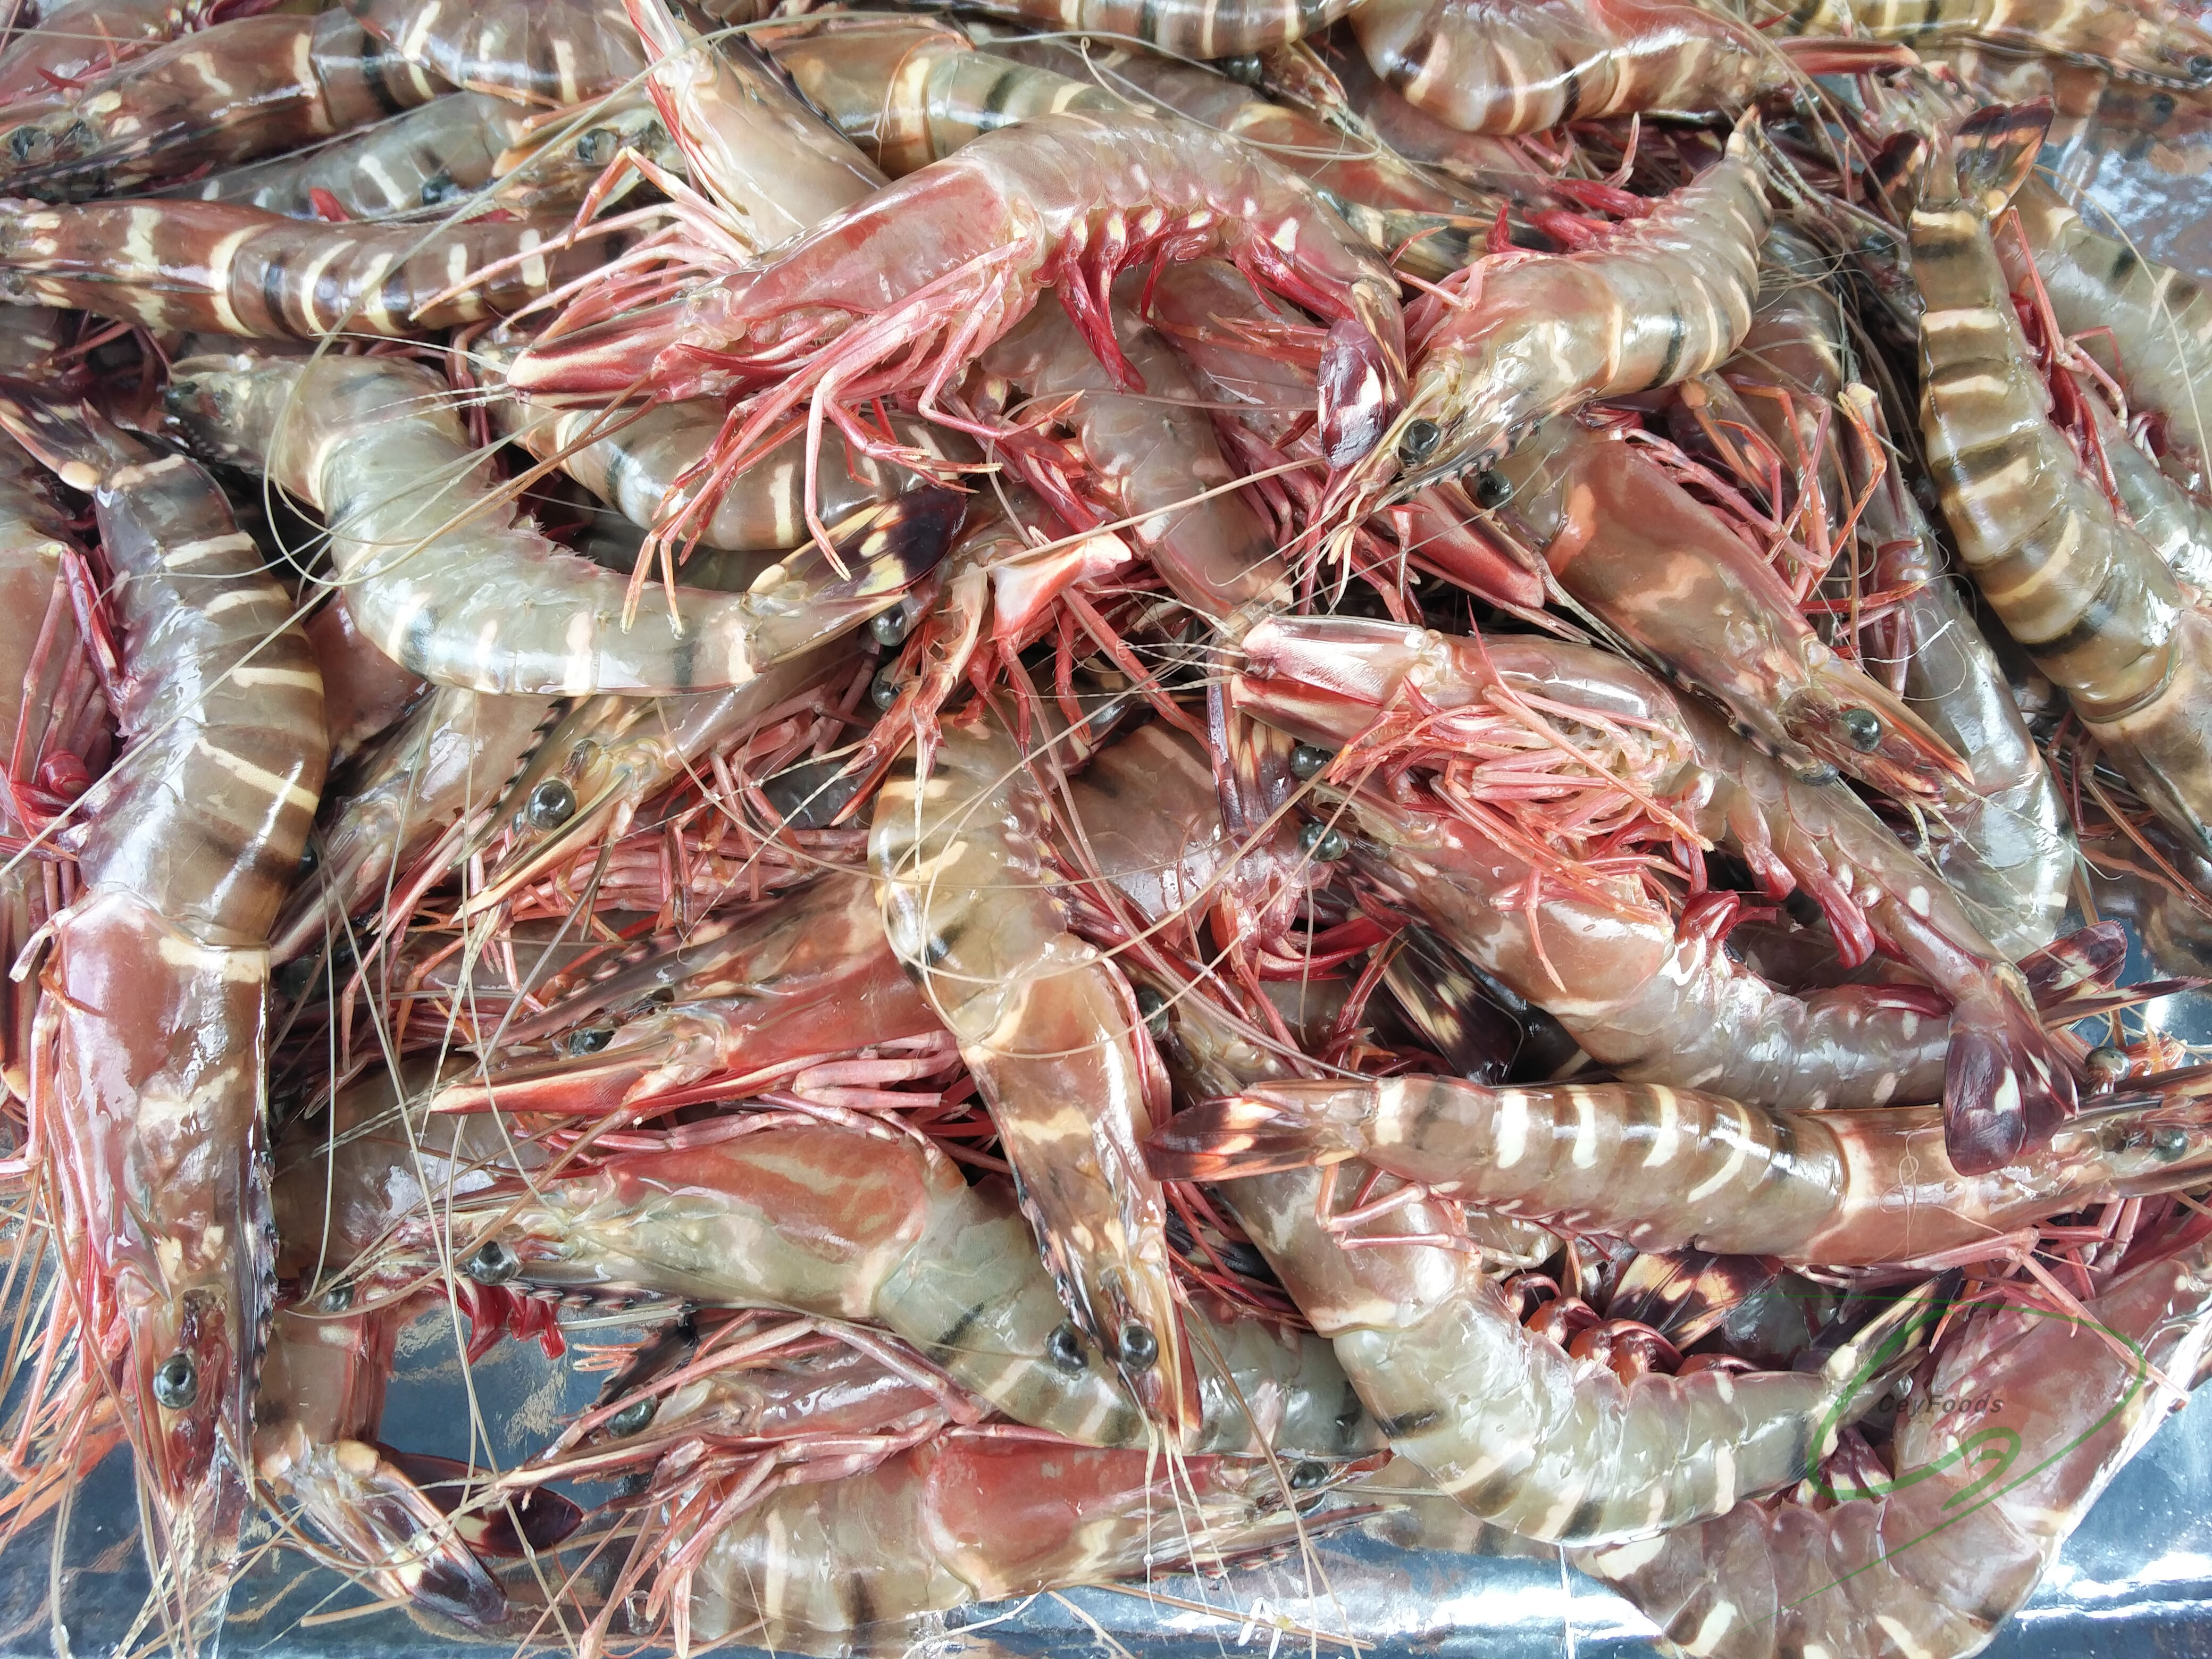 shrimp ceylon foods exports sri lanka ceyfoods seafood processor exporter